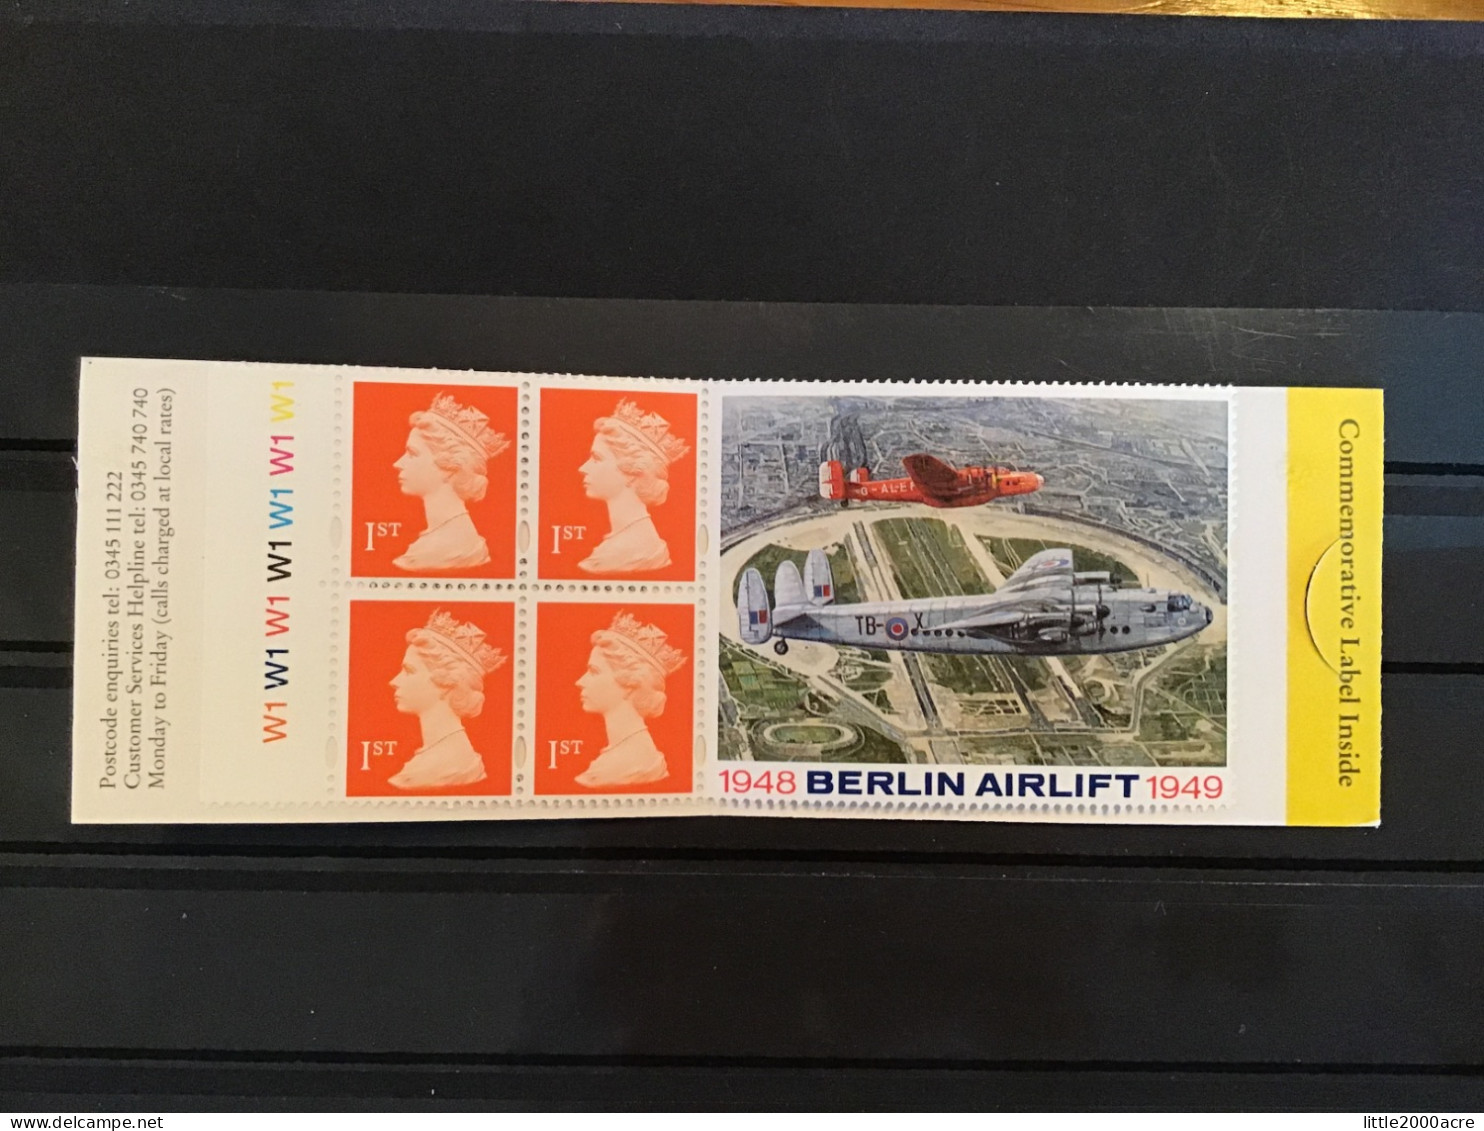 GB 1999 4 1st Class Stamps Barcode Booklet £1.04 Berlin Airlift MNH SG HB17 - Postzegelboekjes